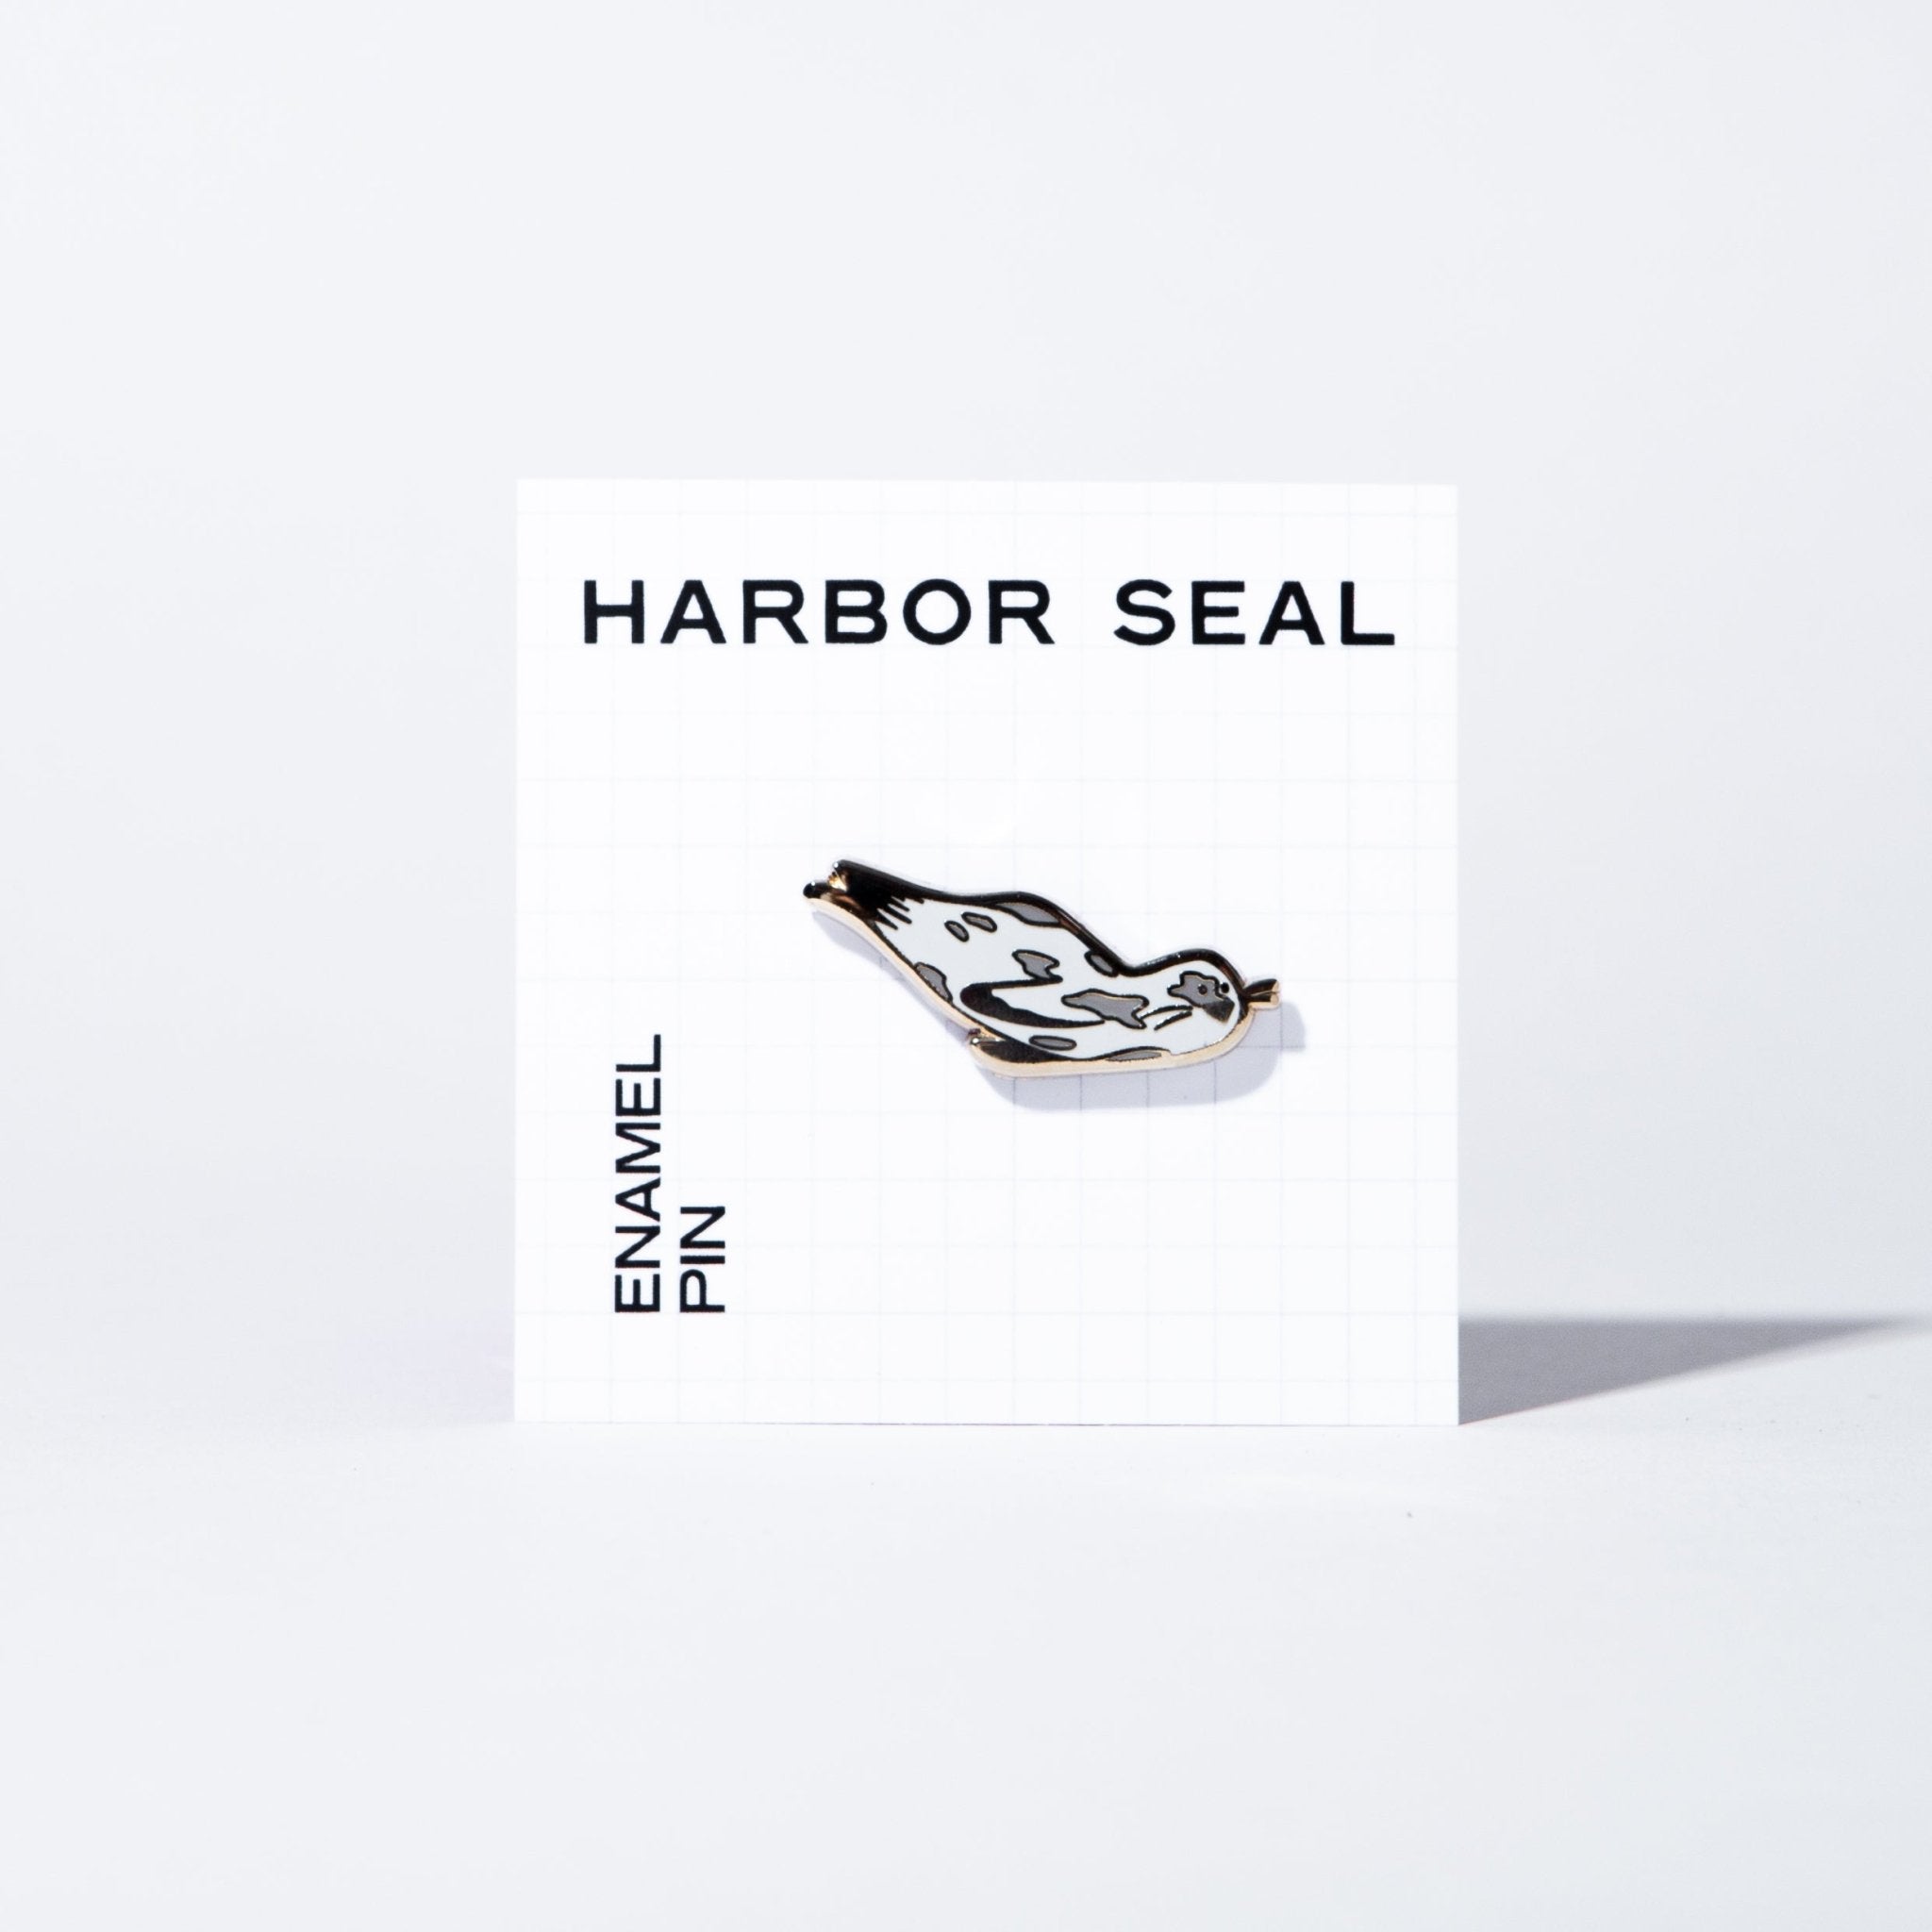 Harbor Seal Pin - Case Study